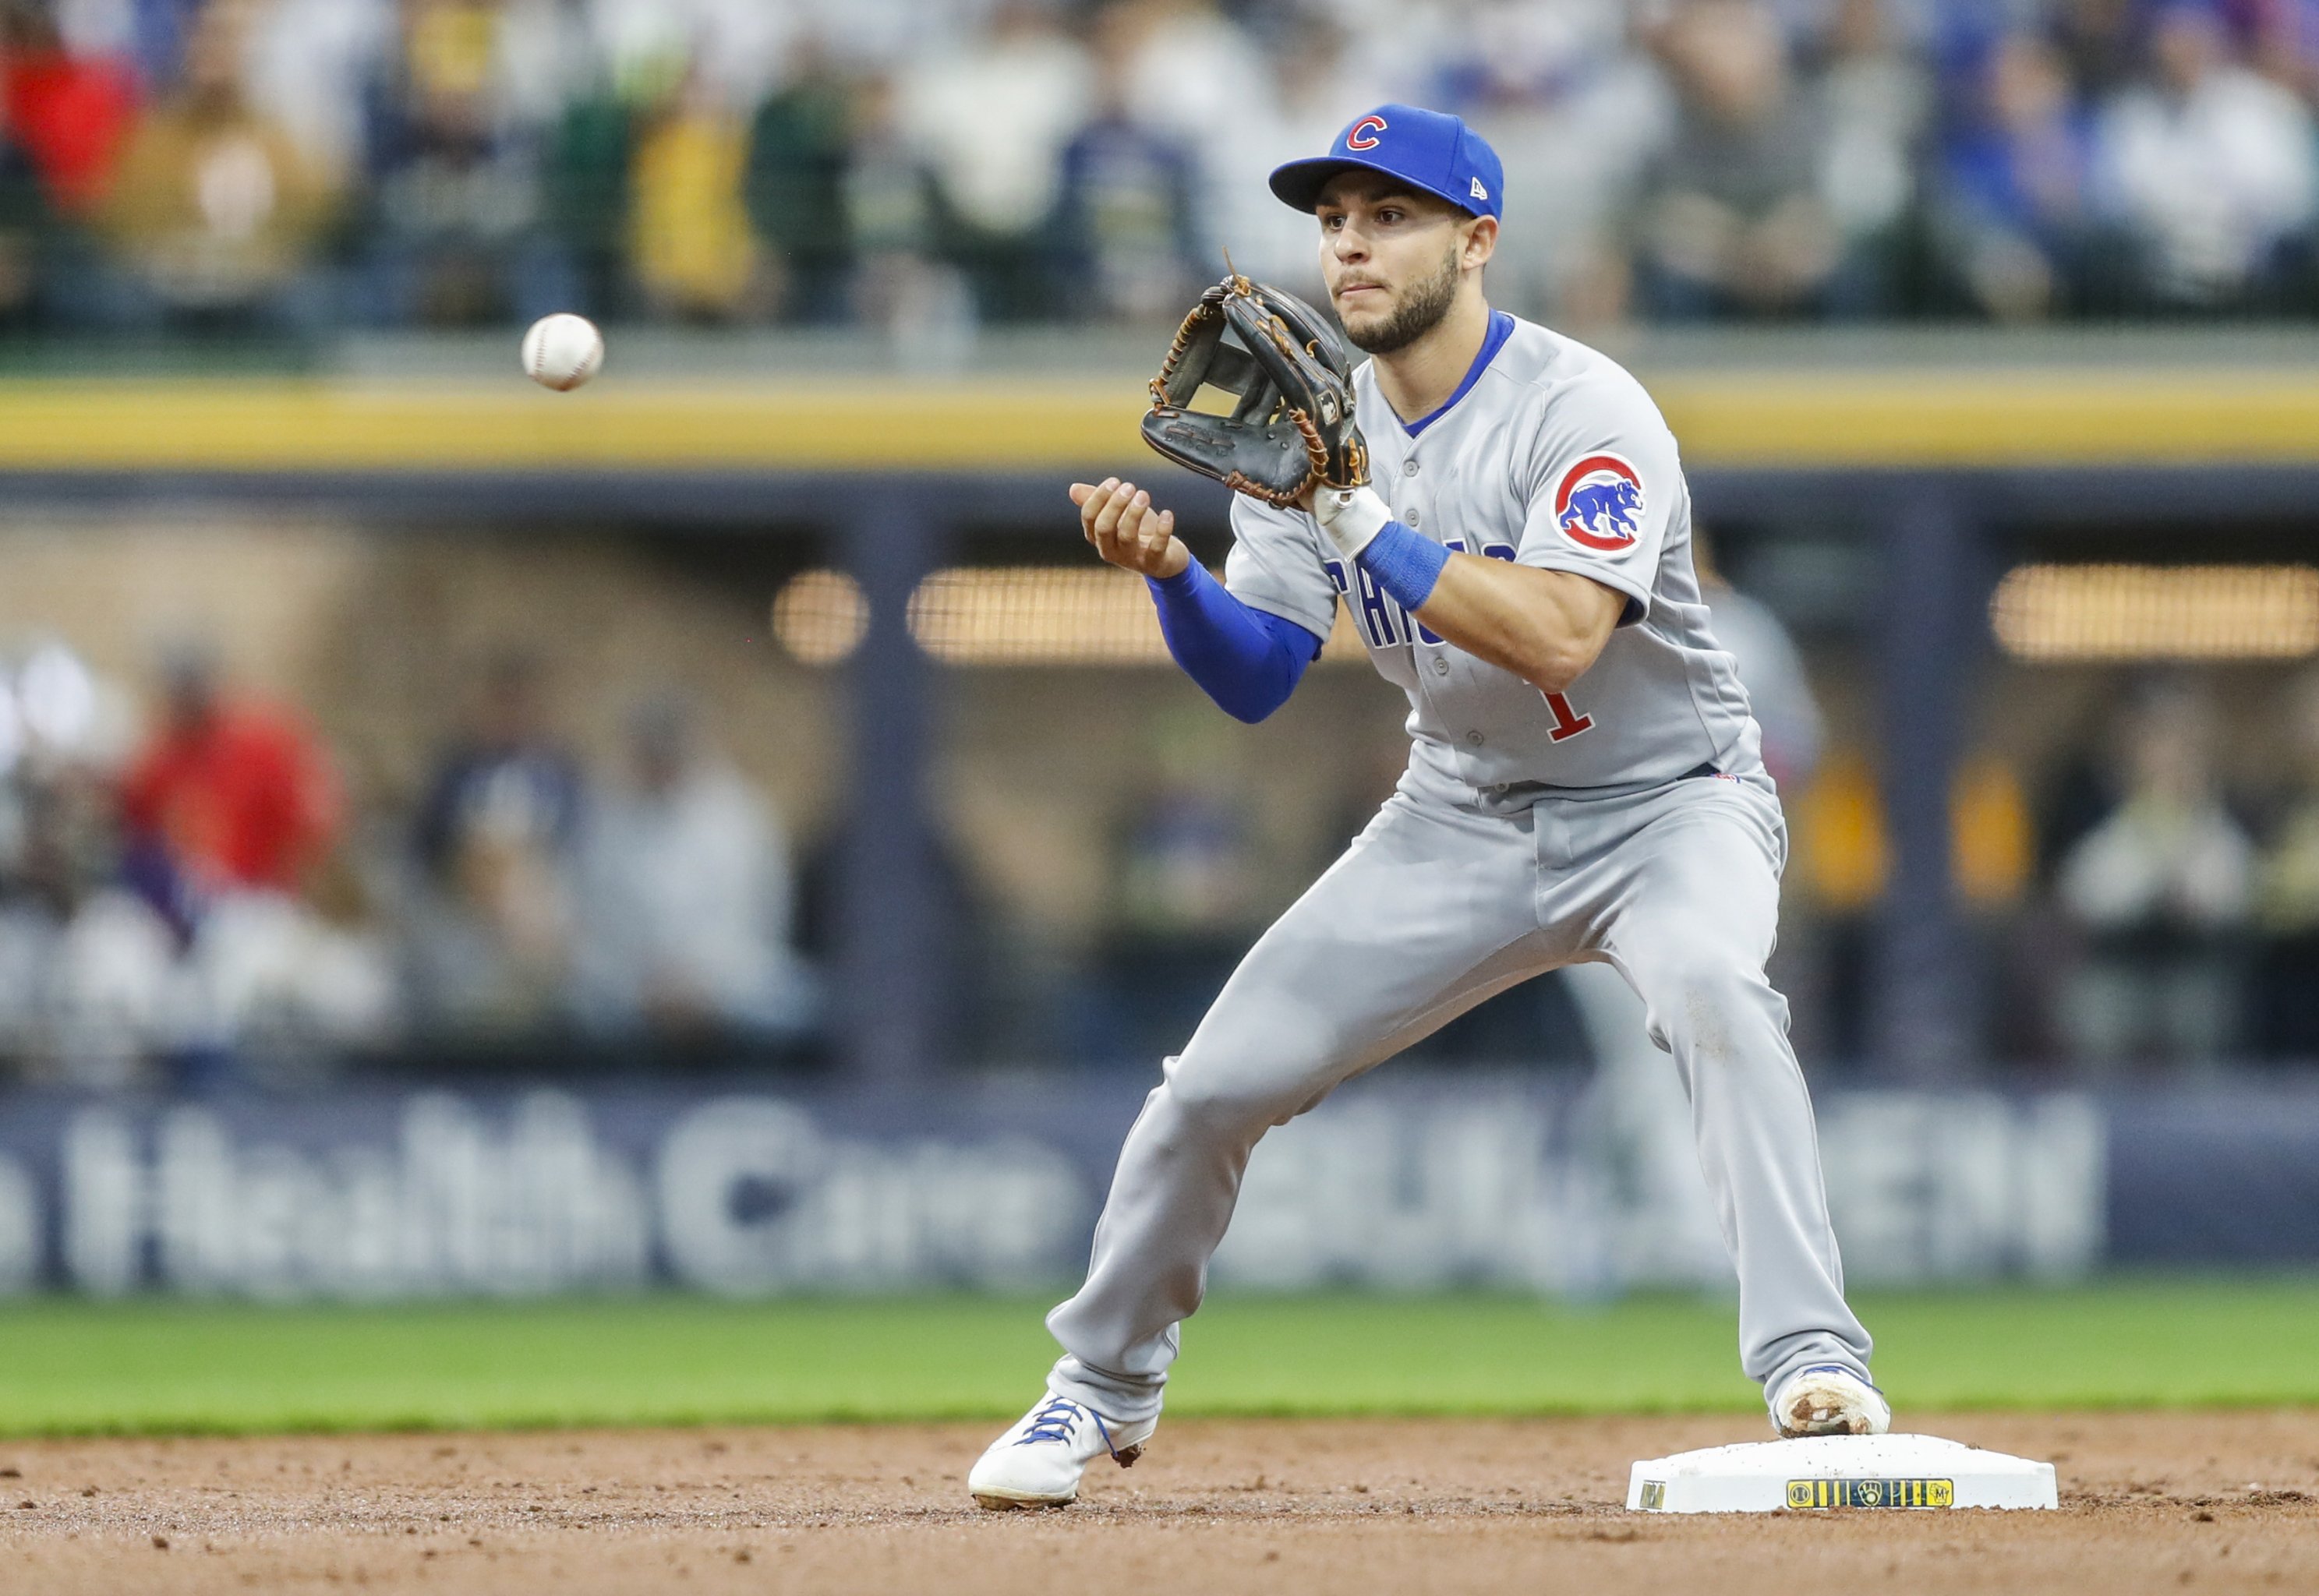 Edwin Ríos contender for Cubs third baseman